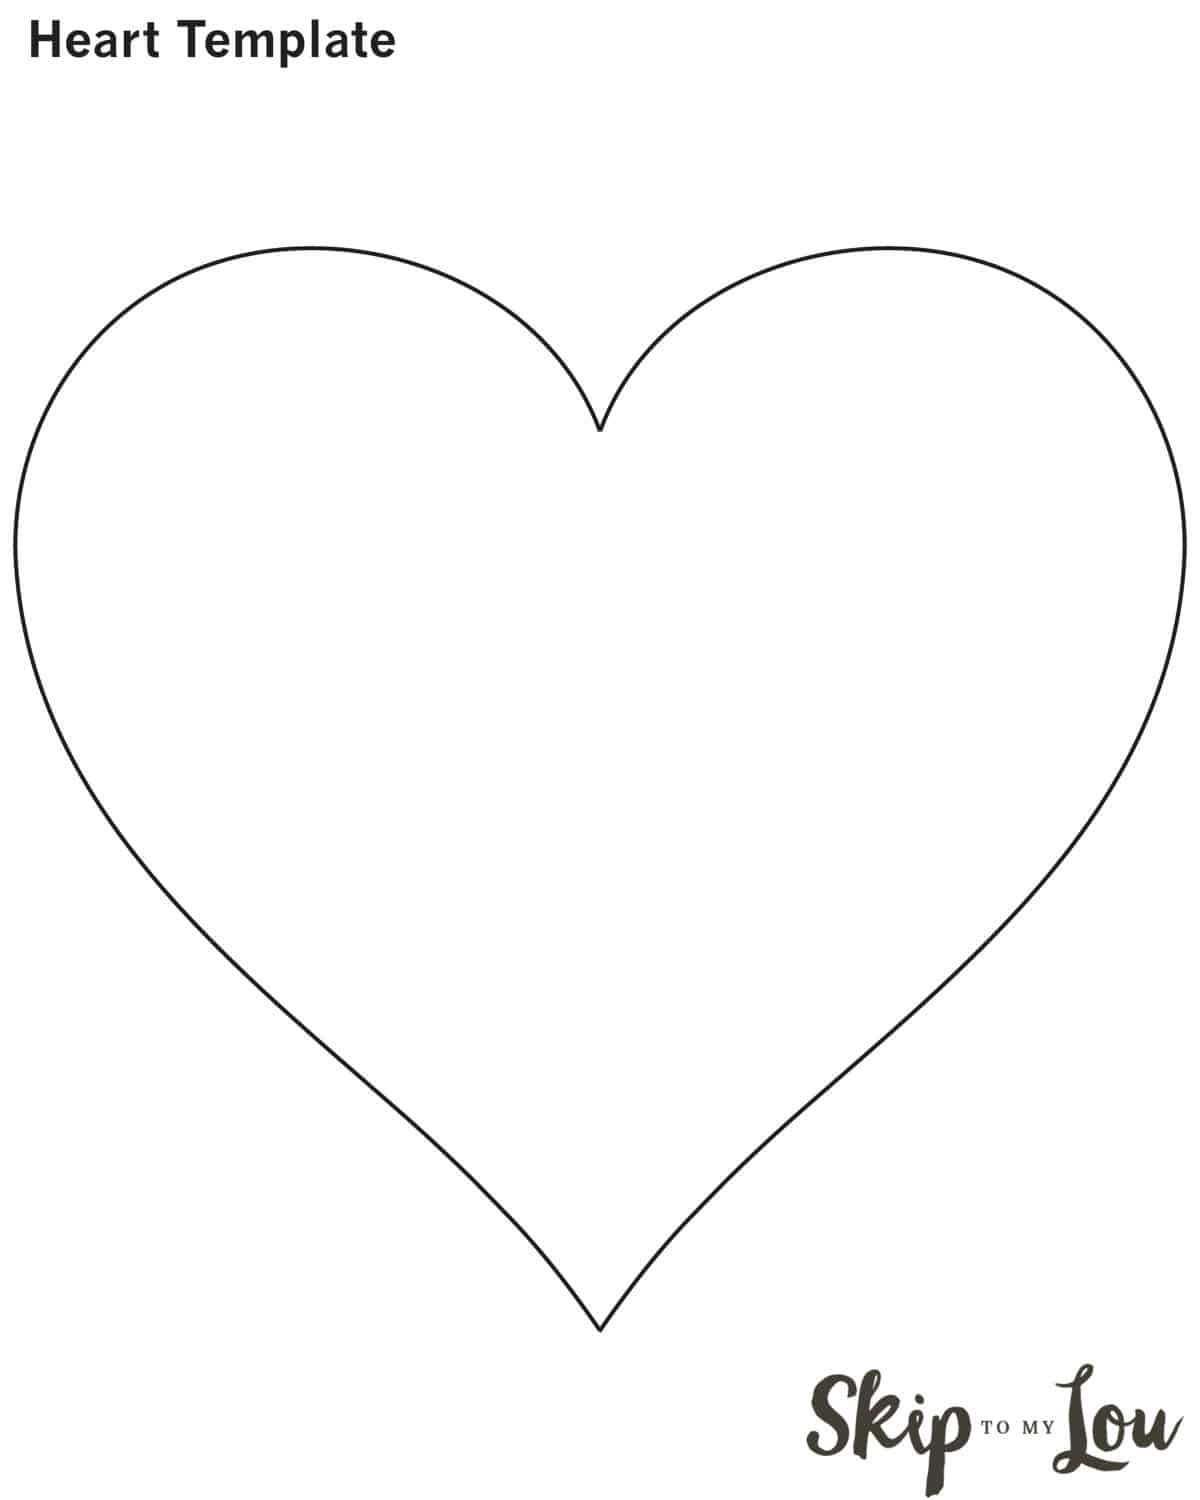 Valentine Heart Attack Idea With Free Printable Heart Template - Free Printables Of Hearts